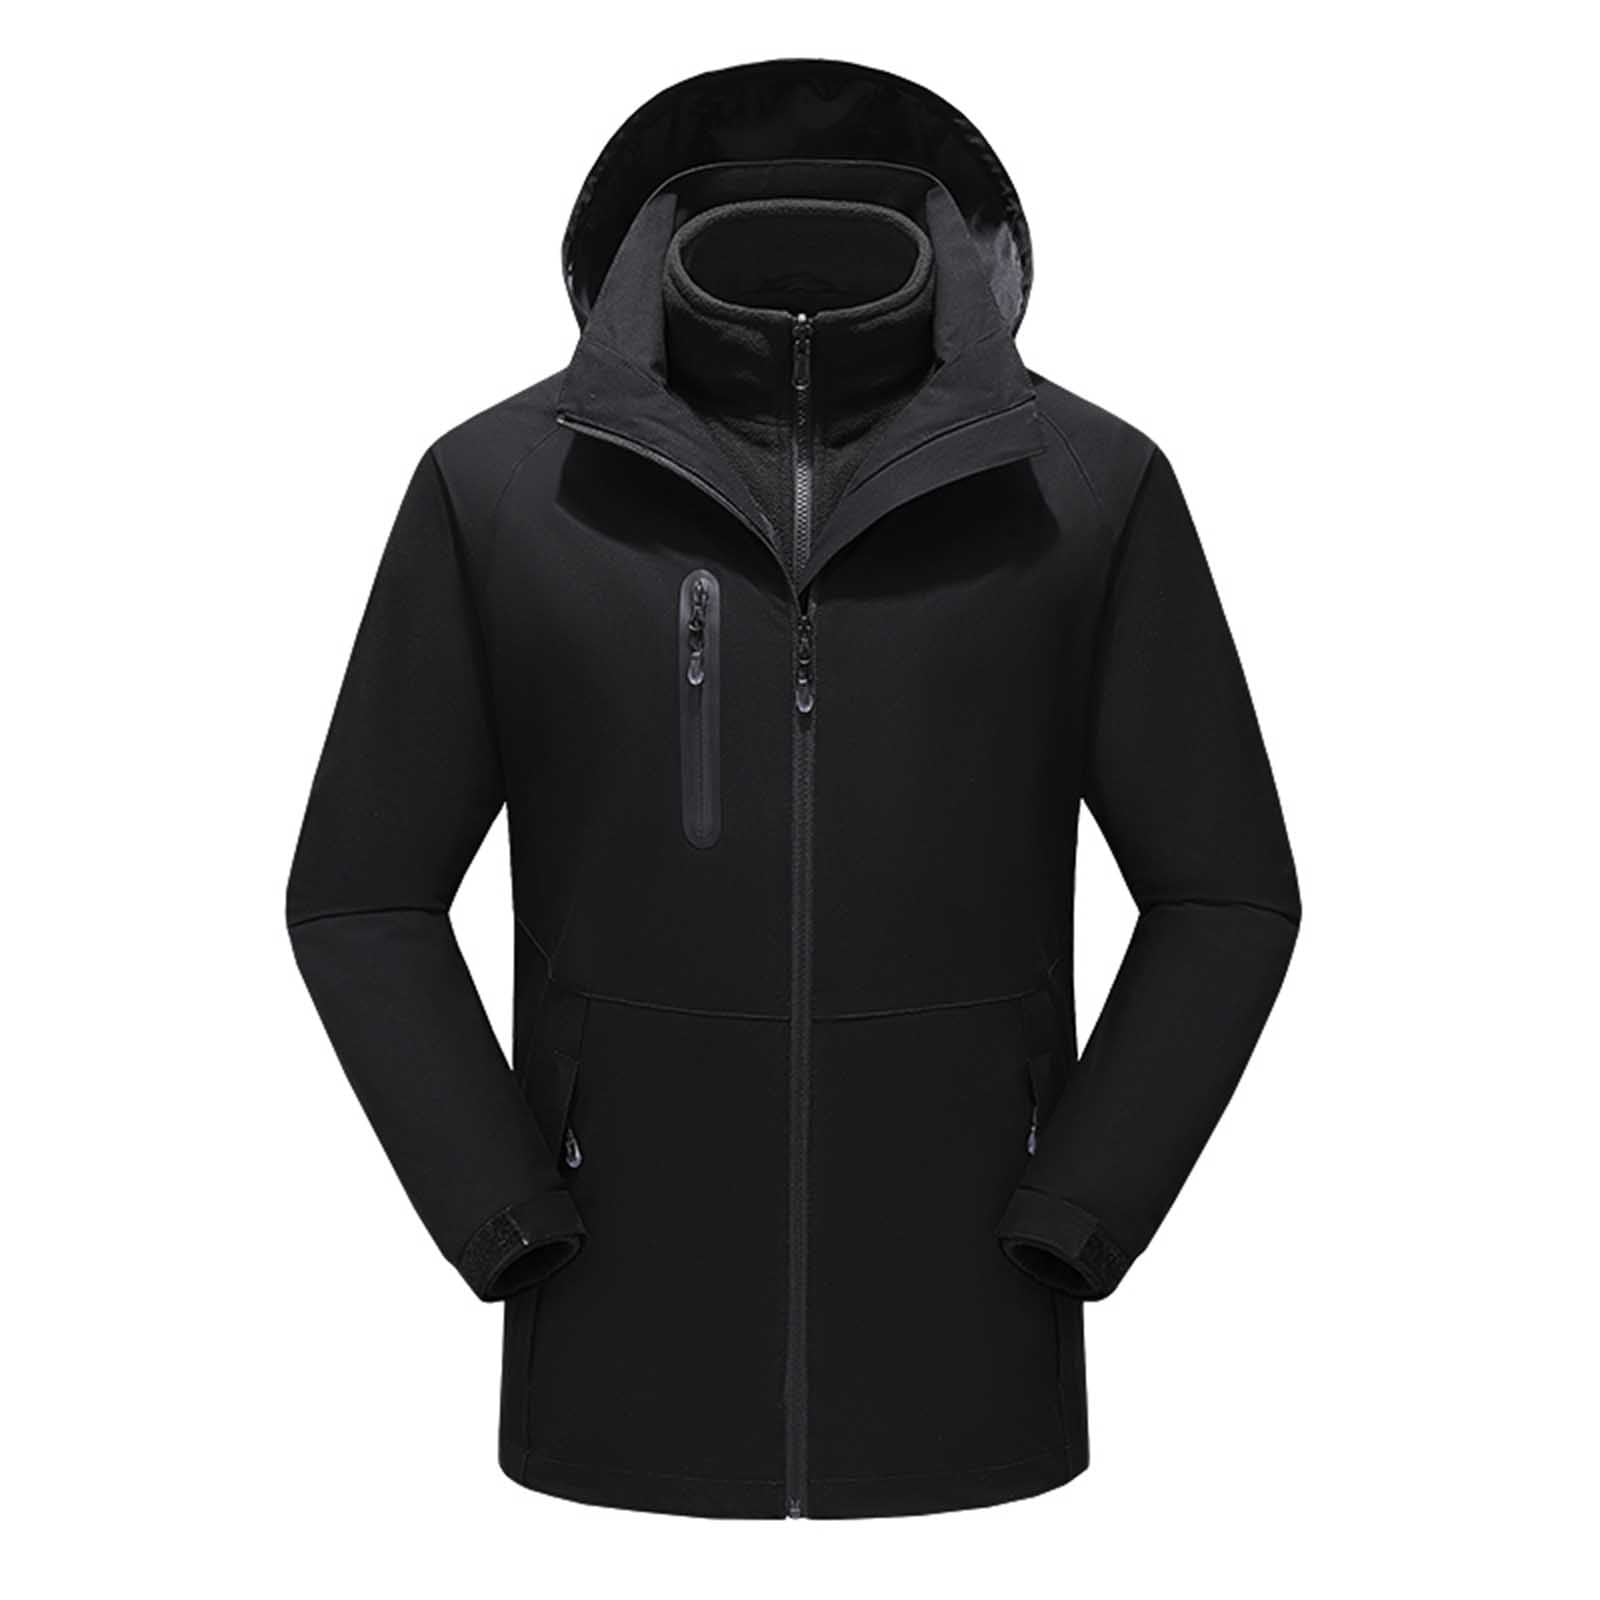 tklpehg Winter Coat Trendy Long Sleeve Jacket Outdoor Warm Clothing Heated  for Riding Skiing Fishing Charging Via Heated Coat Blue M